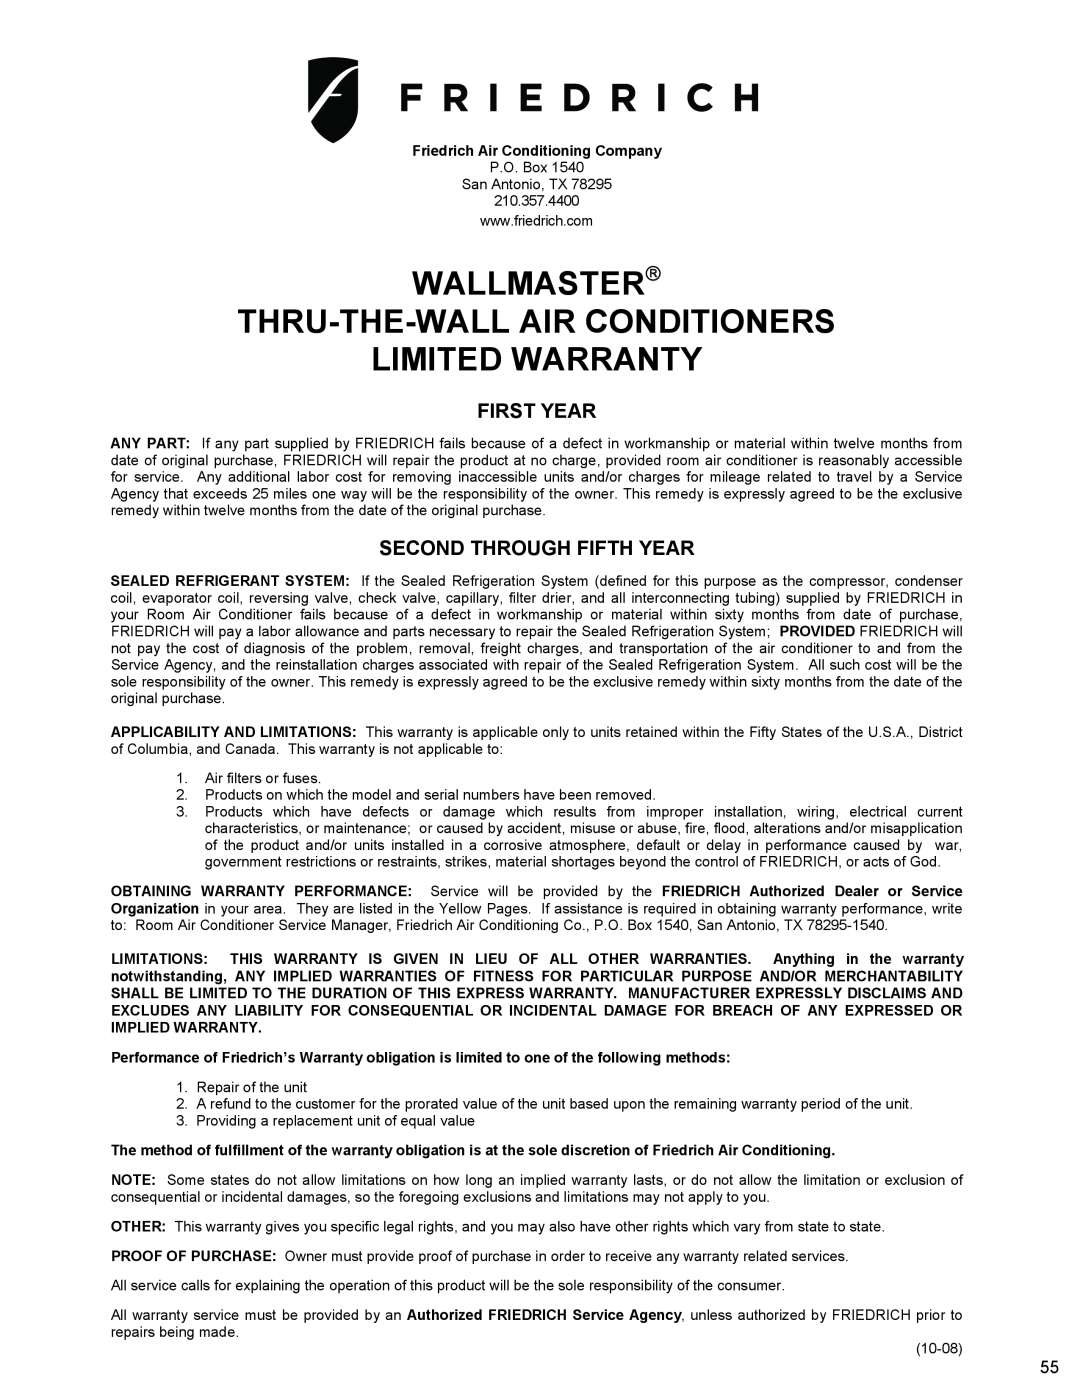 Friedrich WS10B10 Wallmaster≤ Thru-The-Wallair Conditioners, Limited Warranty, First Year, Second Through Fifth Year 